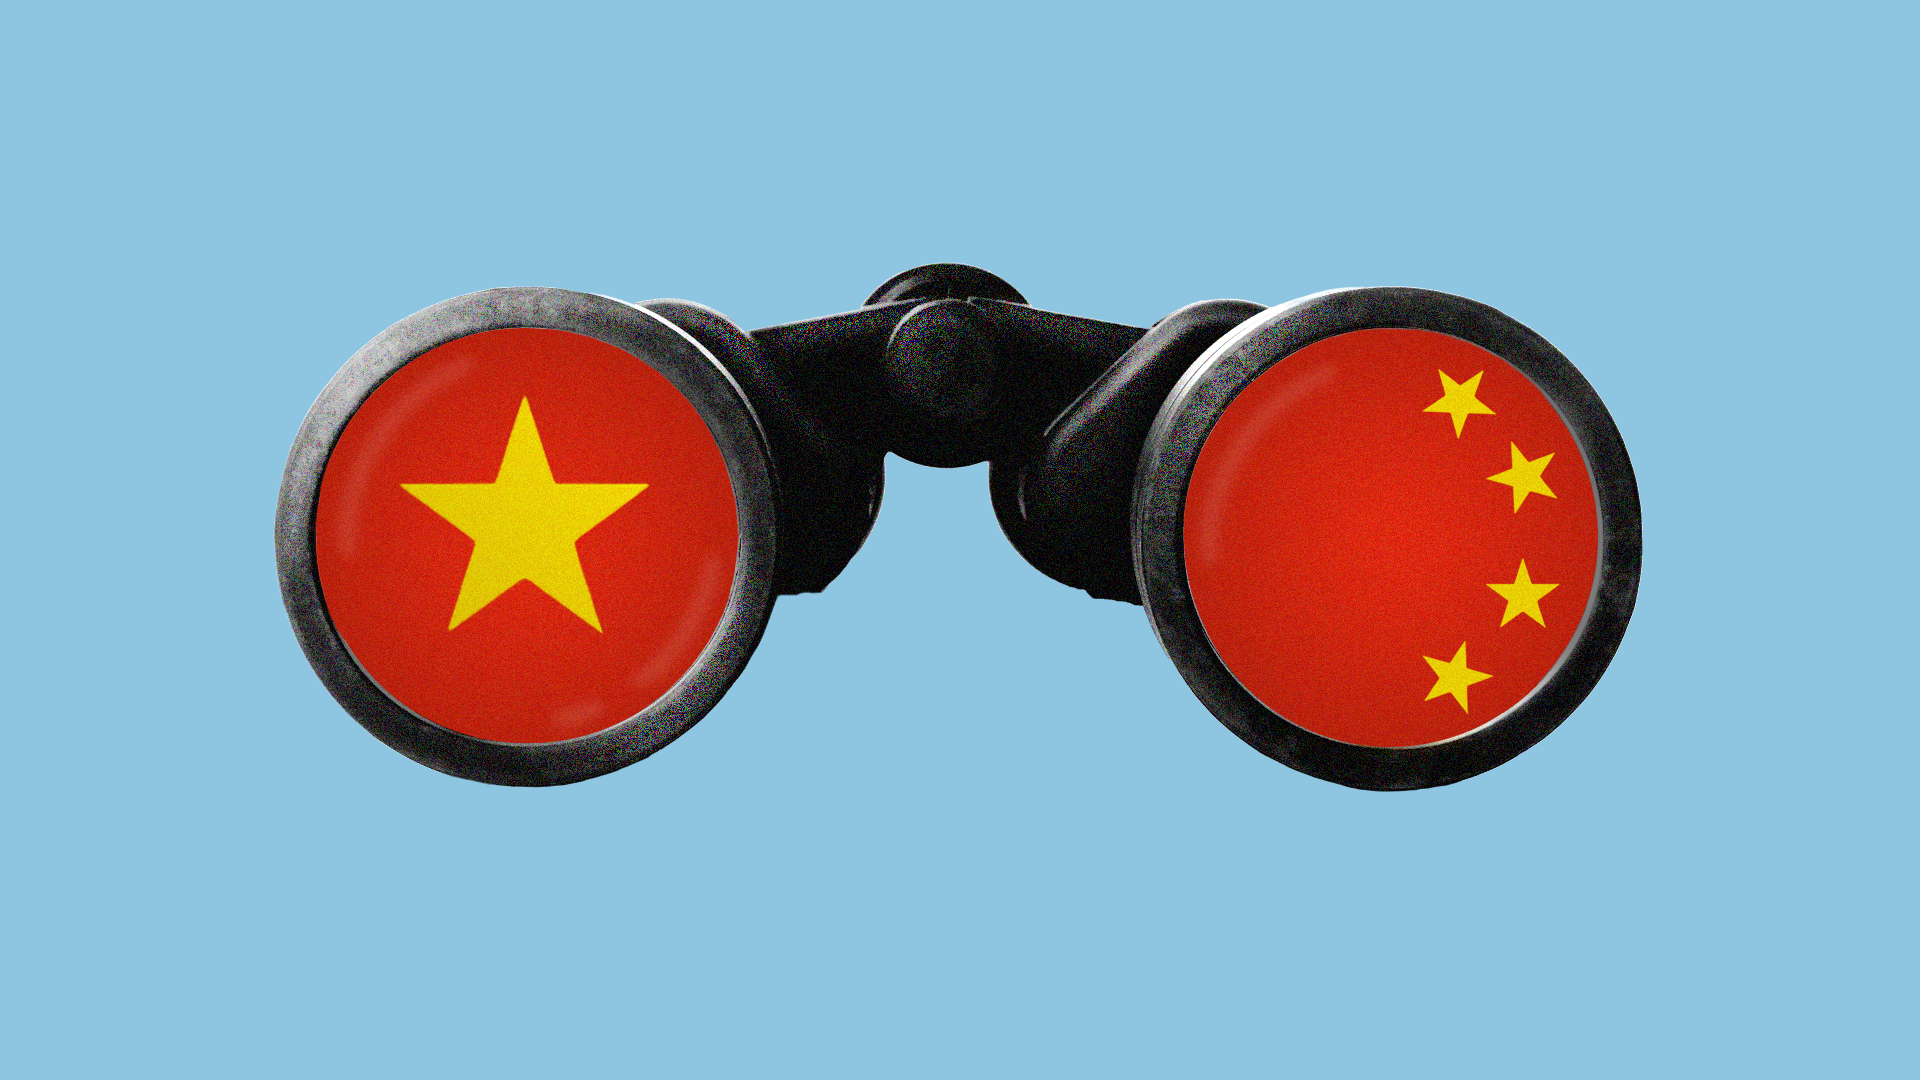 Binoculars with China's flag as the eyehole.